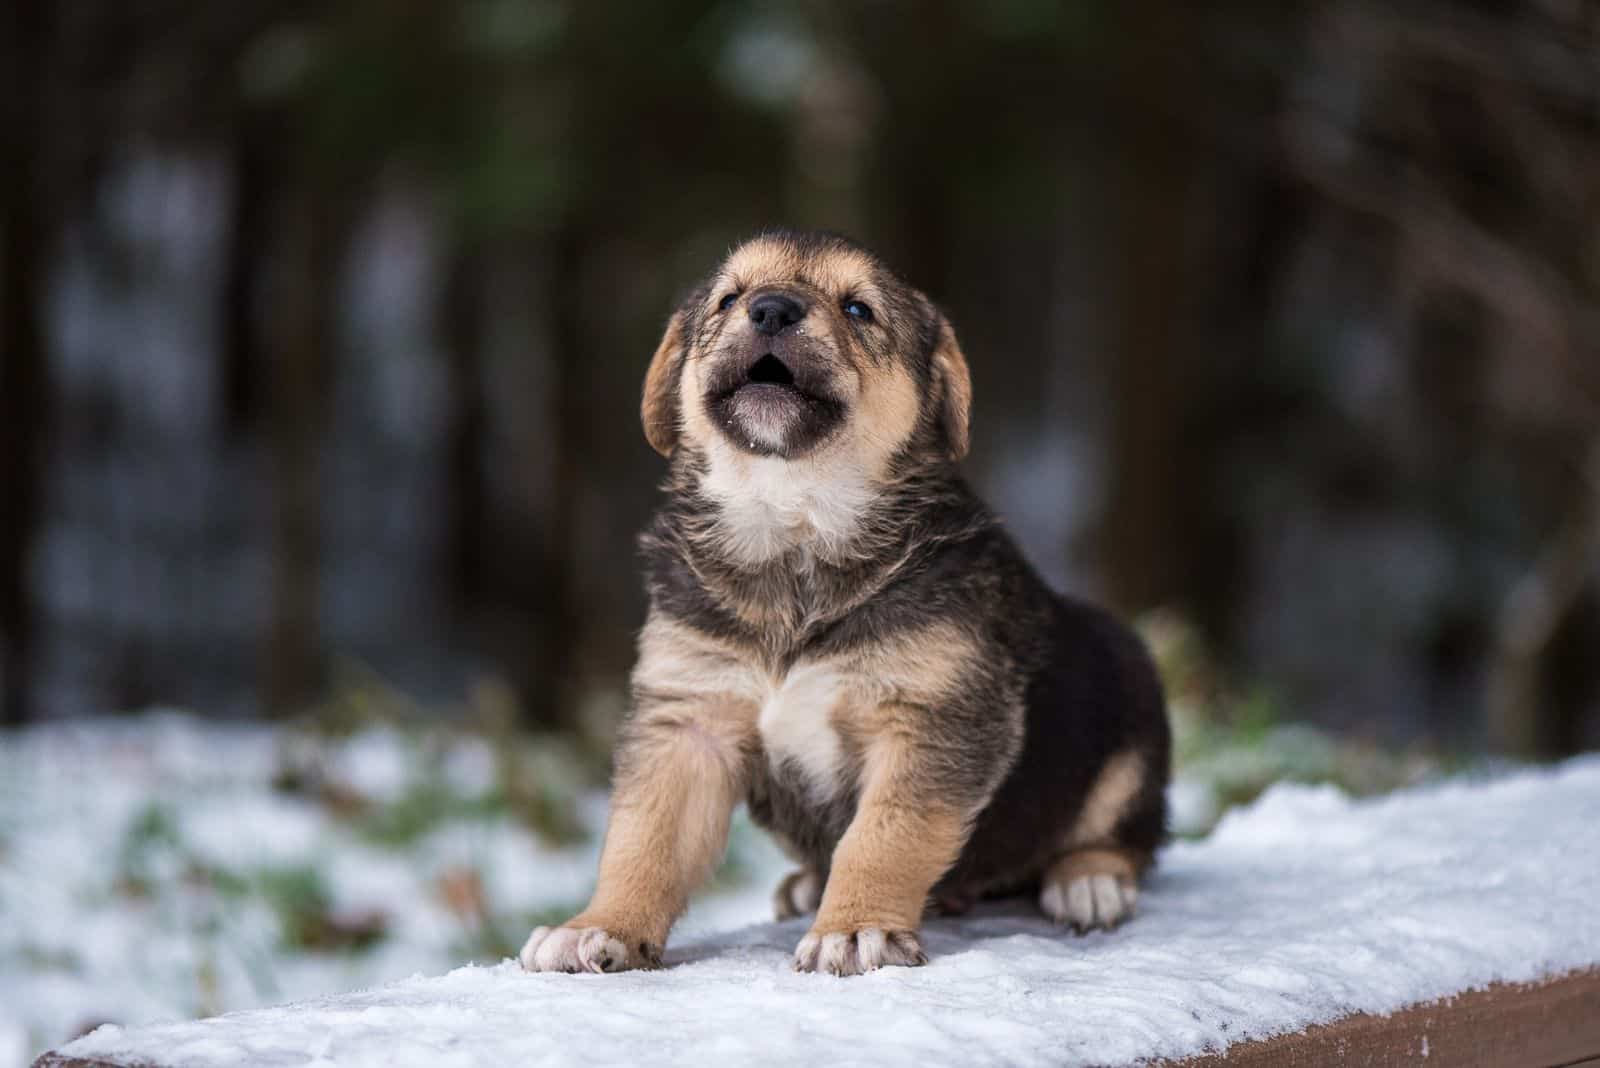 The German Shepherd enjoys the snow